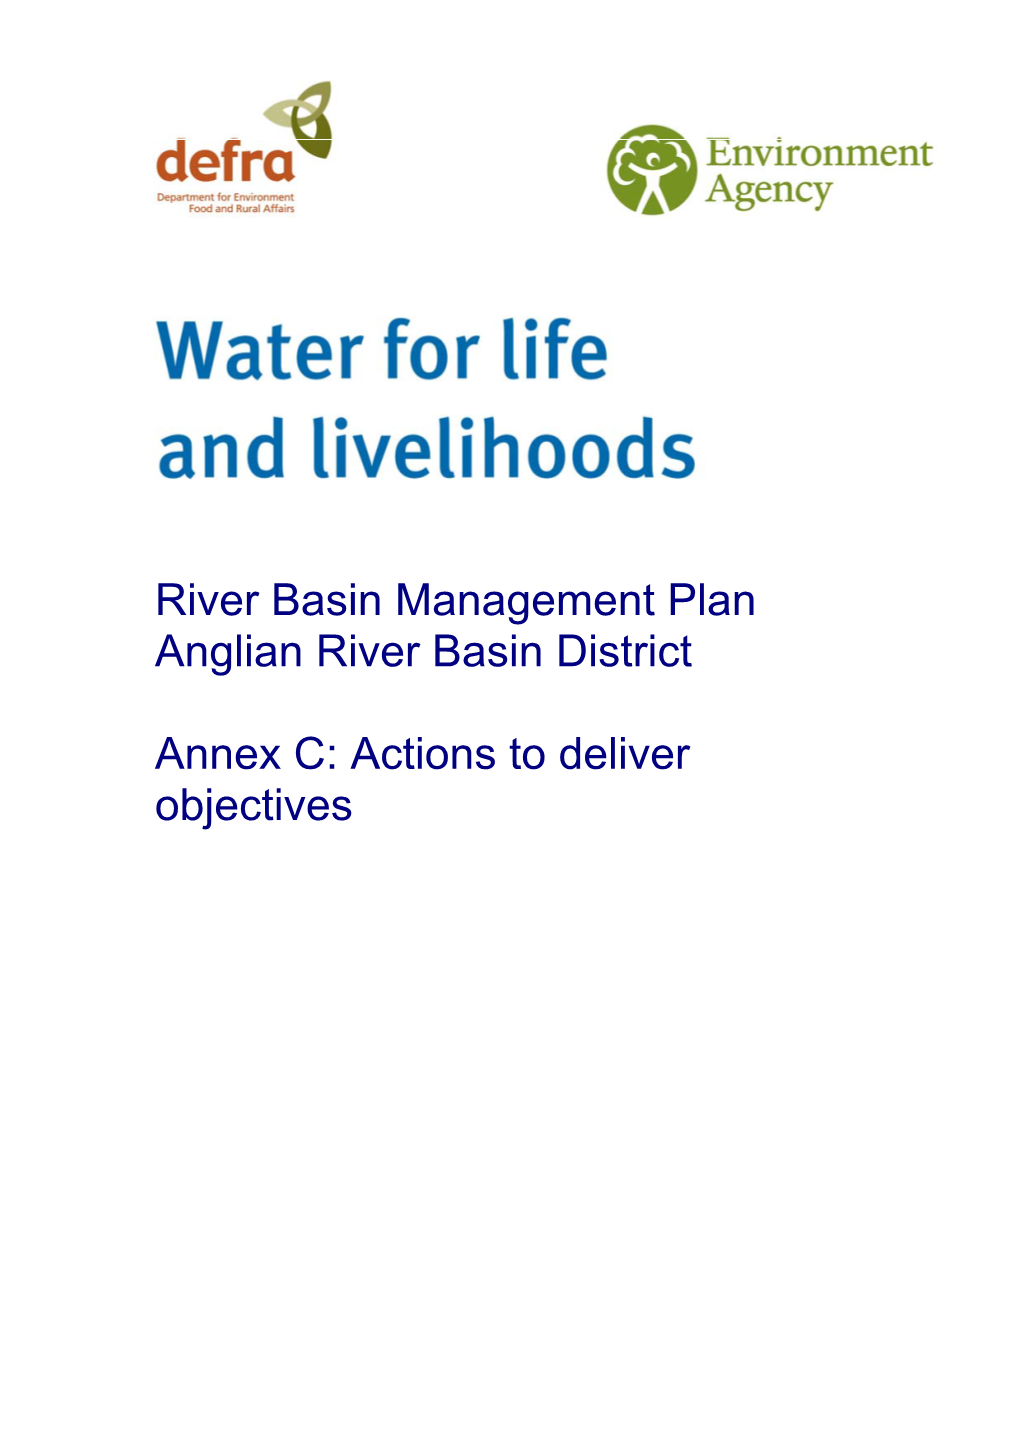 River Basin Management Plan Anglian River Basin District